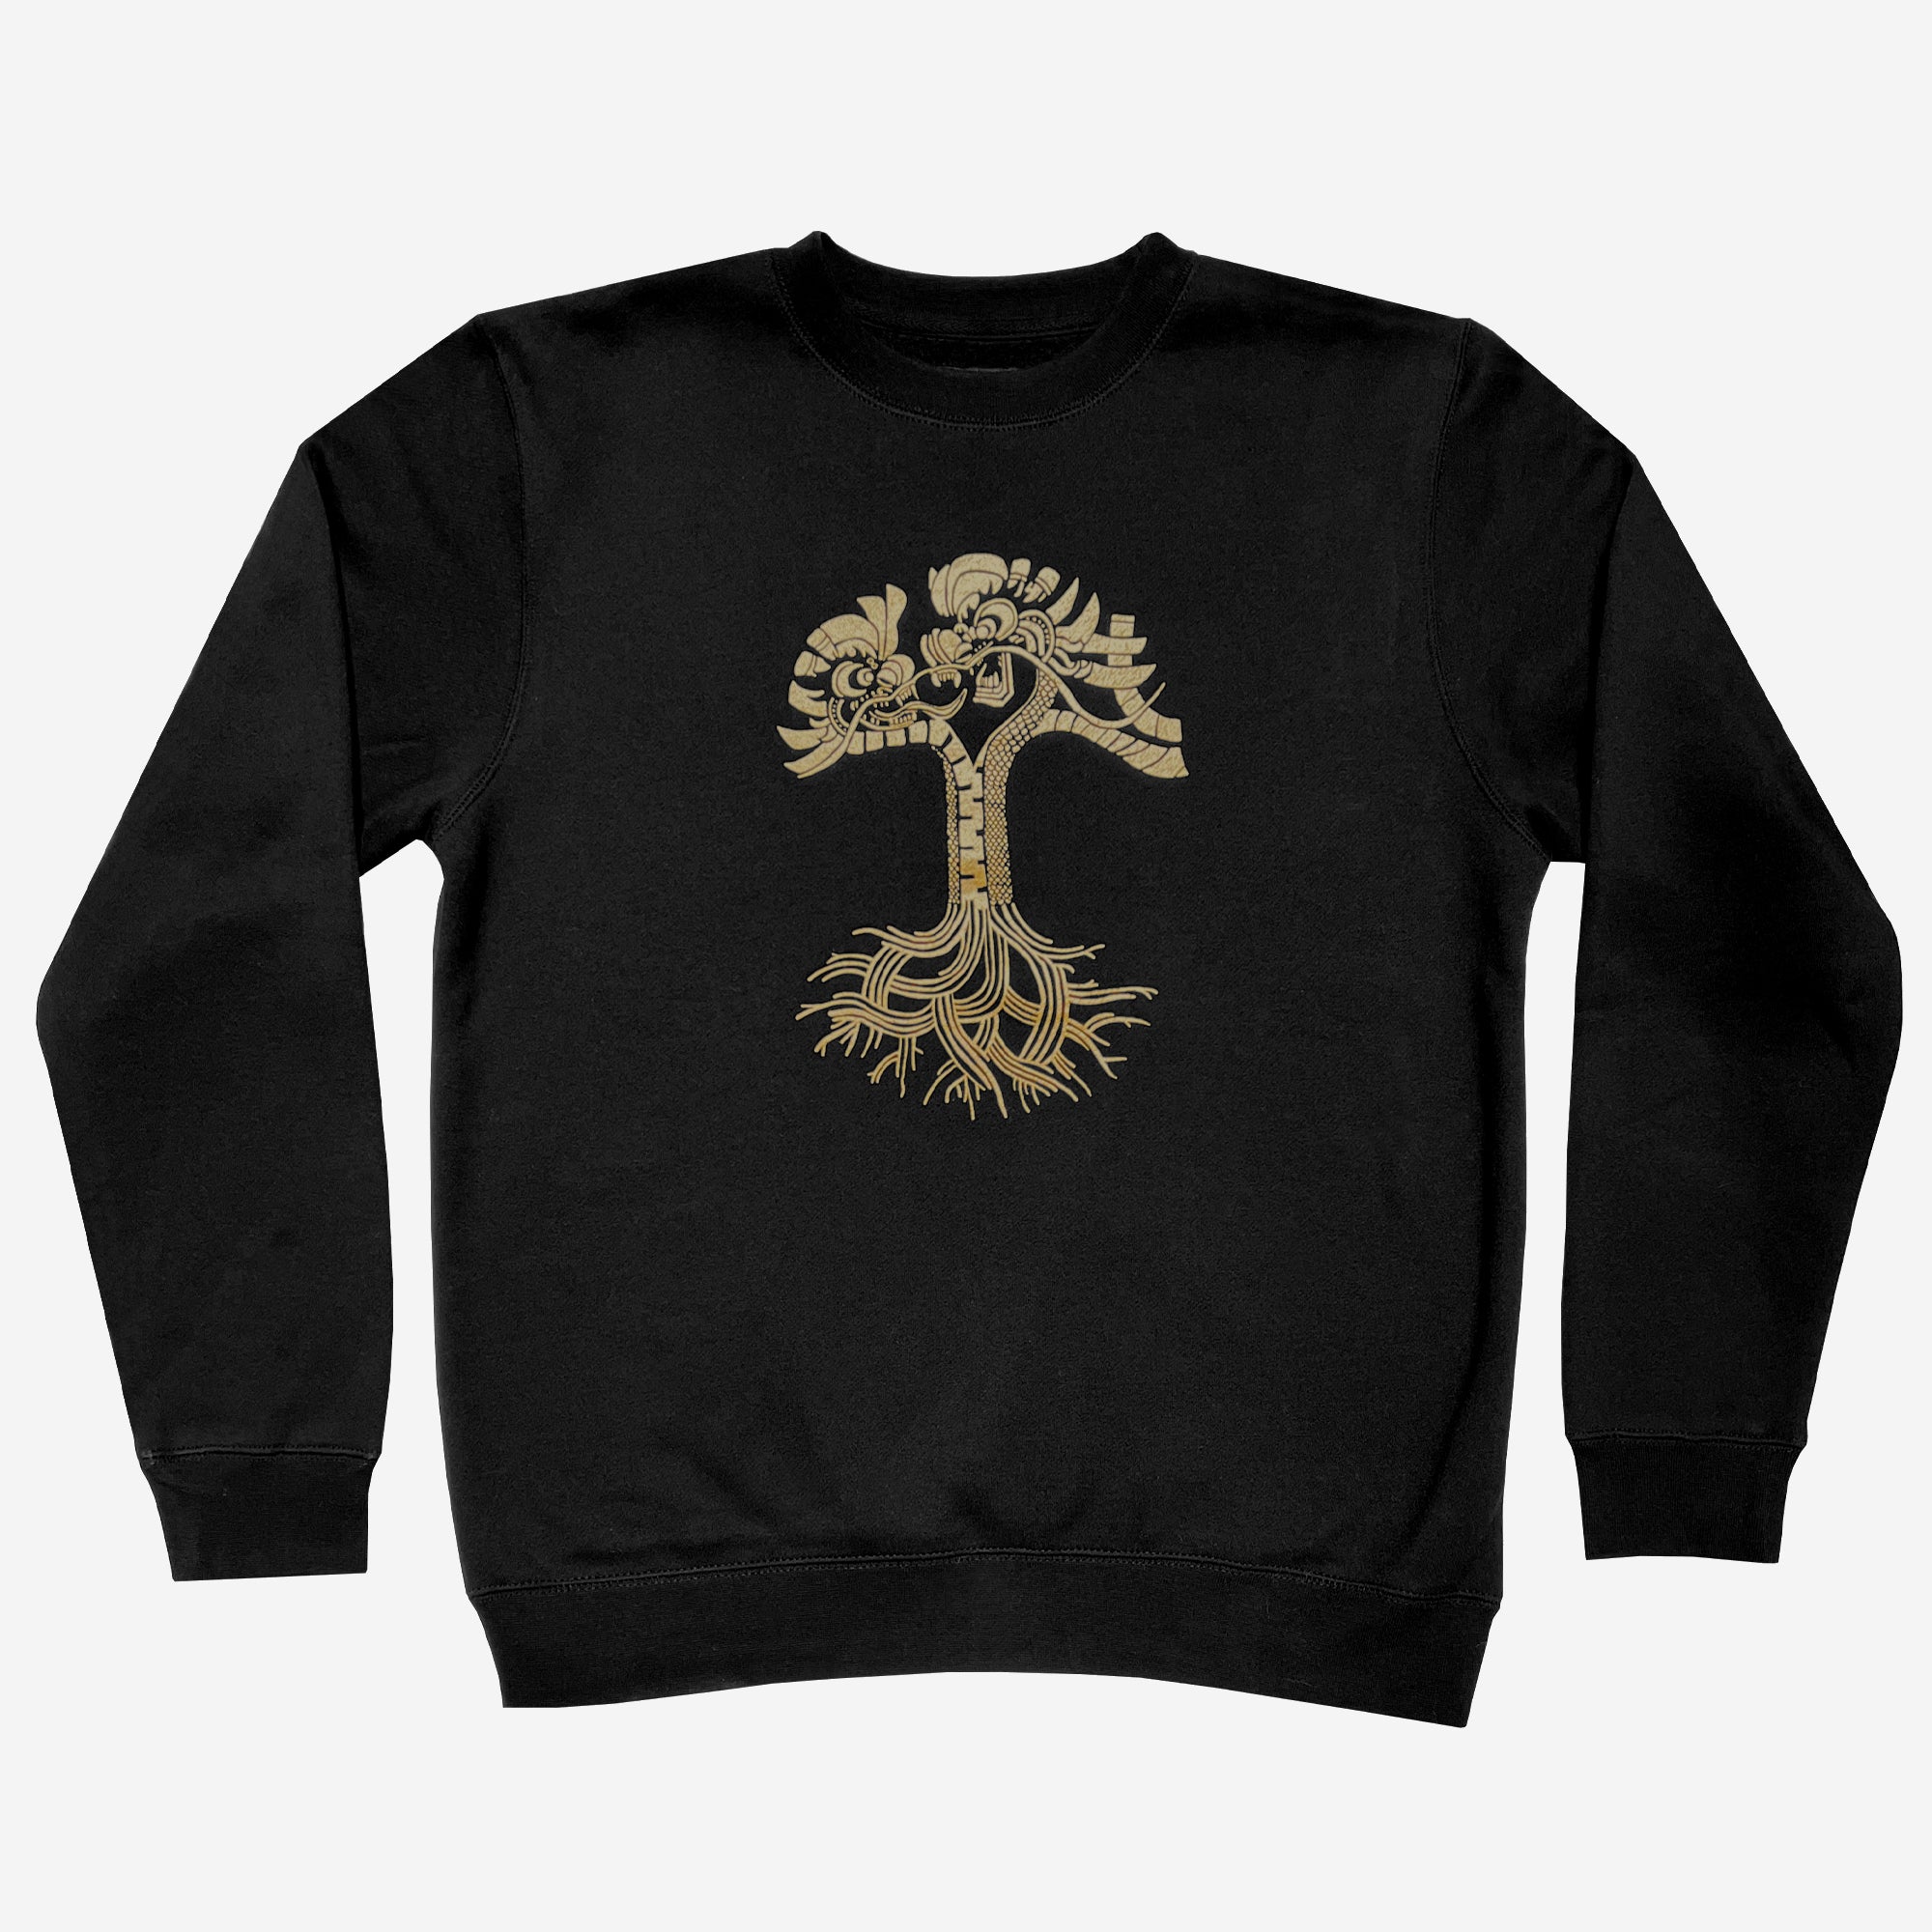 Black crewneck sweatshirt with metallic gold dragon power design in the shape of the Oaklandish tree logo.